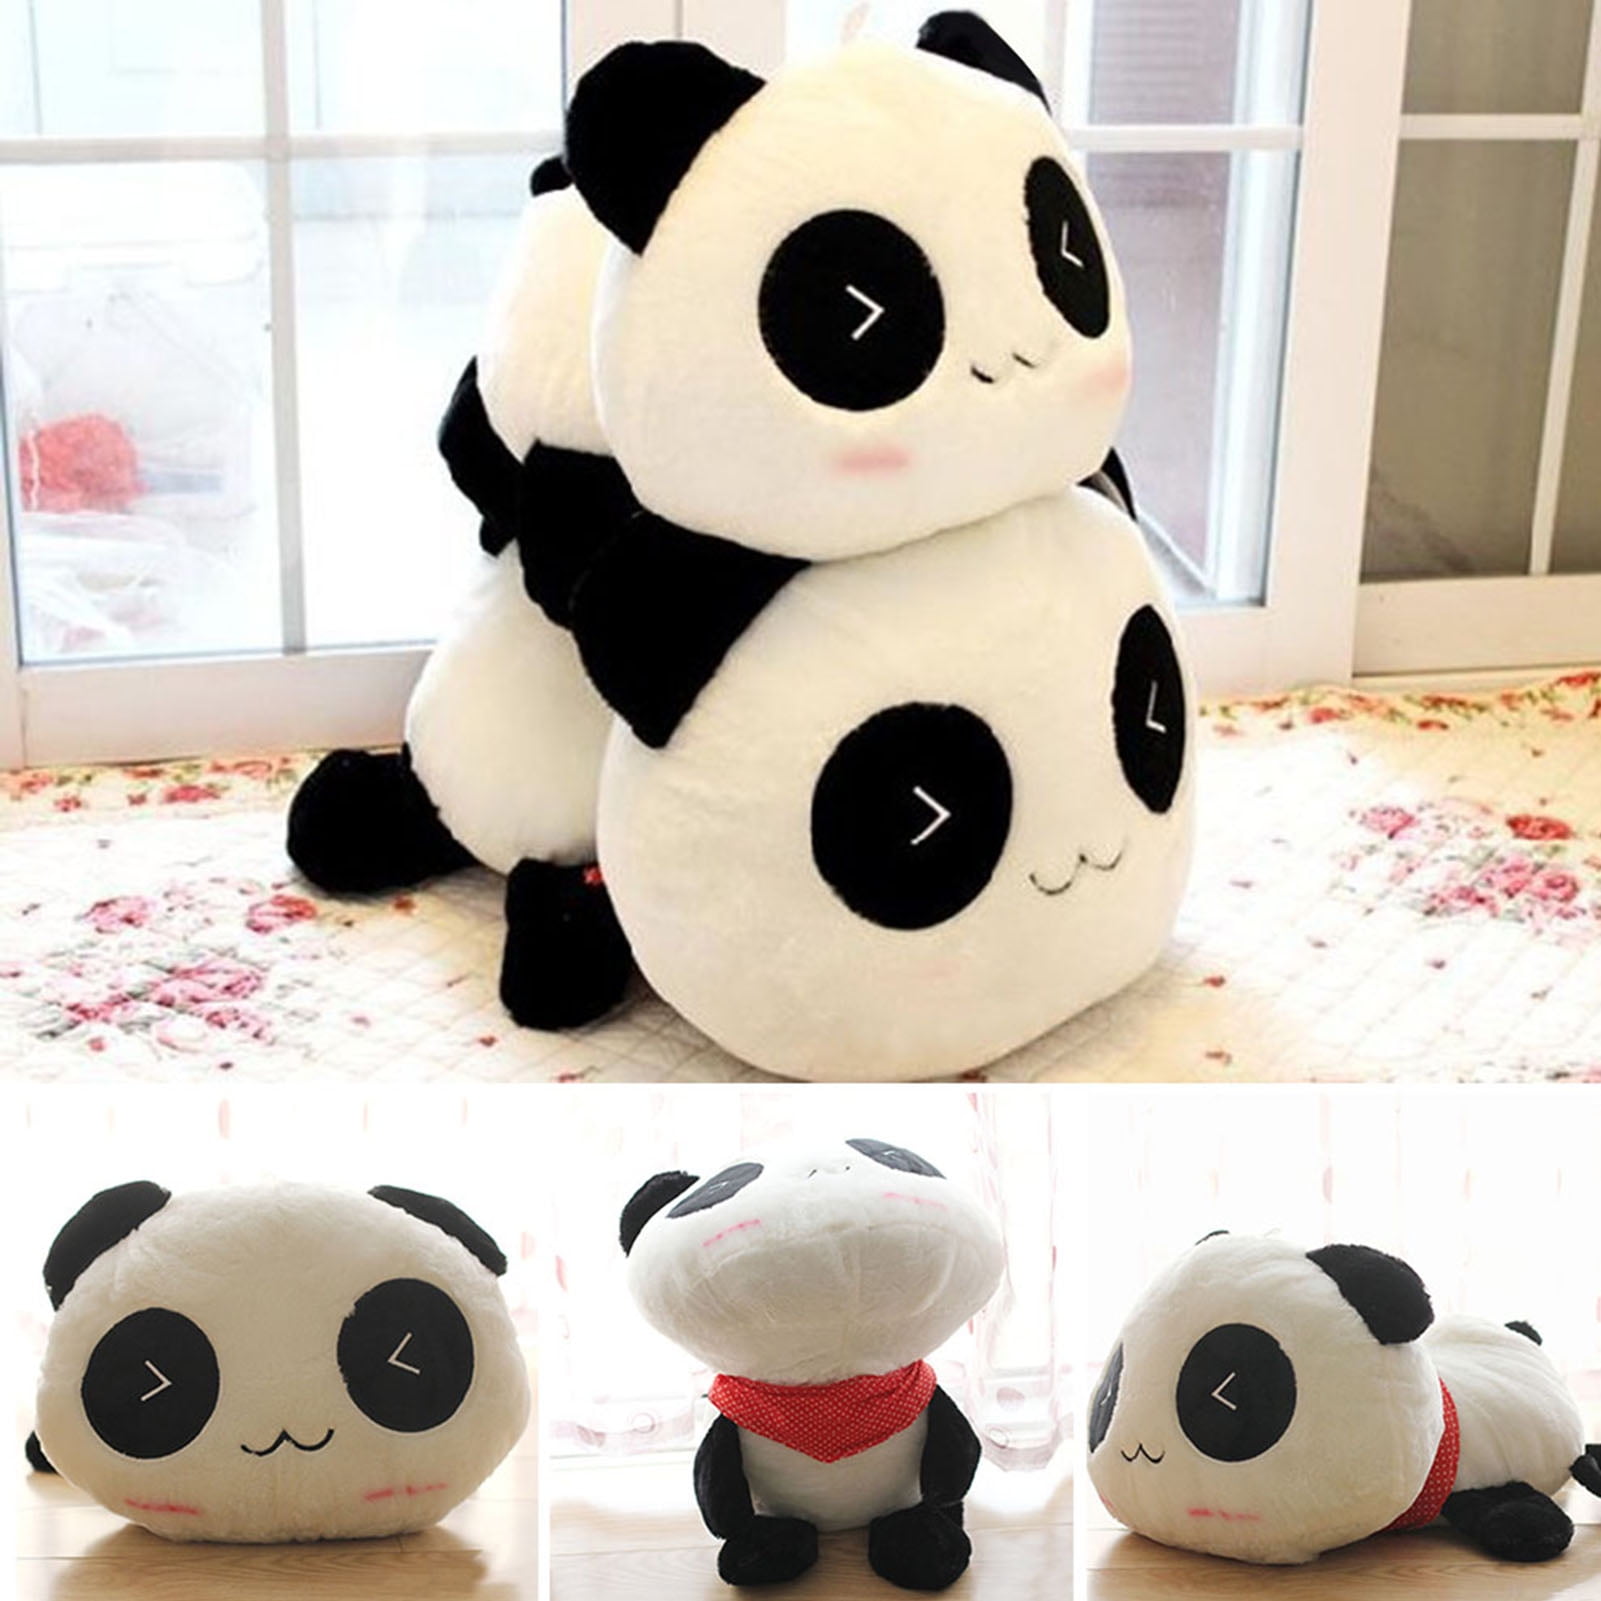 8" Cute Plush Doll Toy Stuffed Animal Panda Pillow Cushion Bolster Holiday Gift 